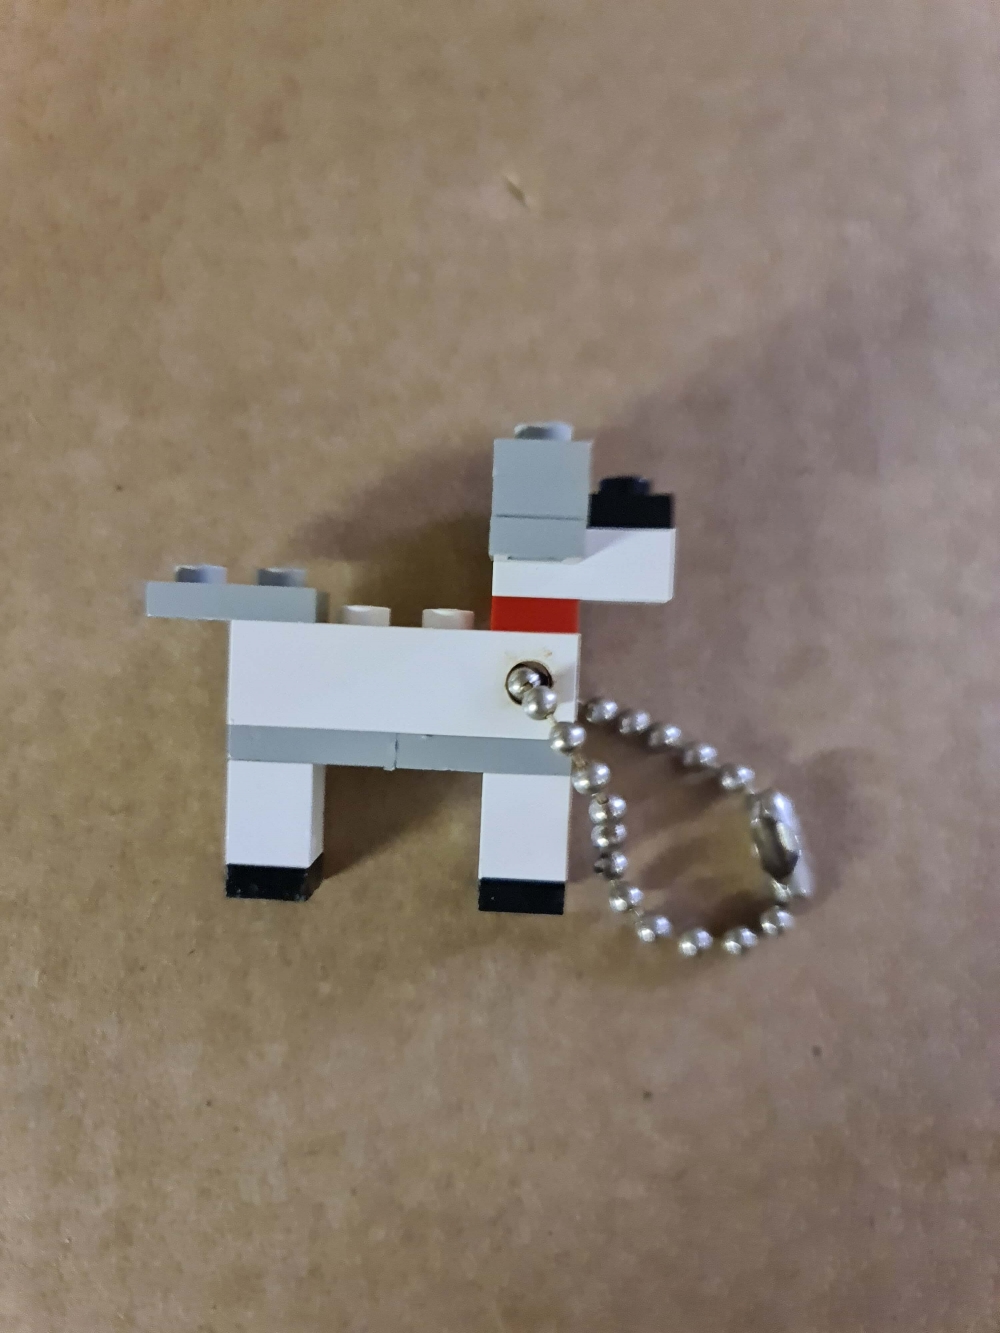 Dog Key Chain, Composed of Bricks - Bead Chain Type
Lego sin første nøkkelring! Meget sjelden. i god stand i forhold til alder.
100% original.